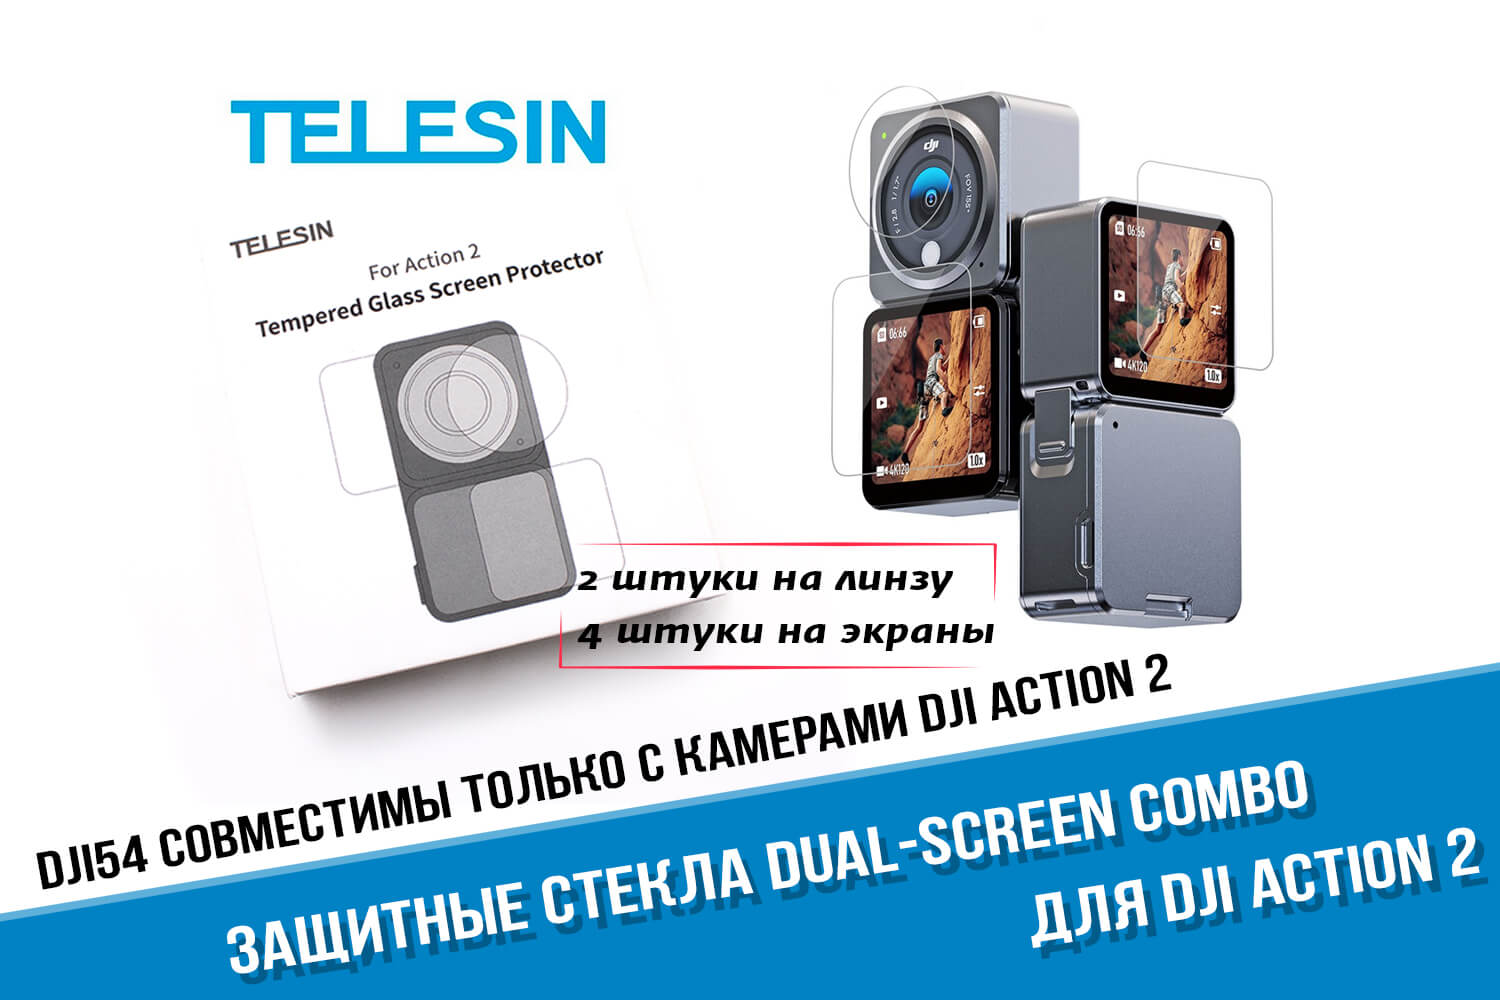 Защитные стекла DJI Action 2 Dual-Screen Combo.